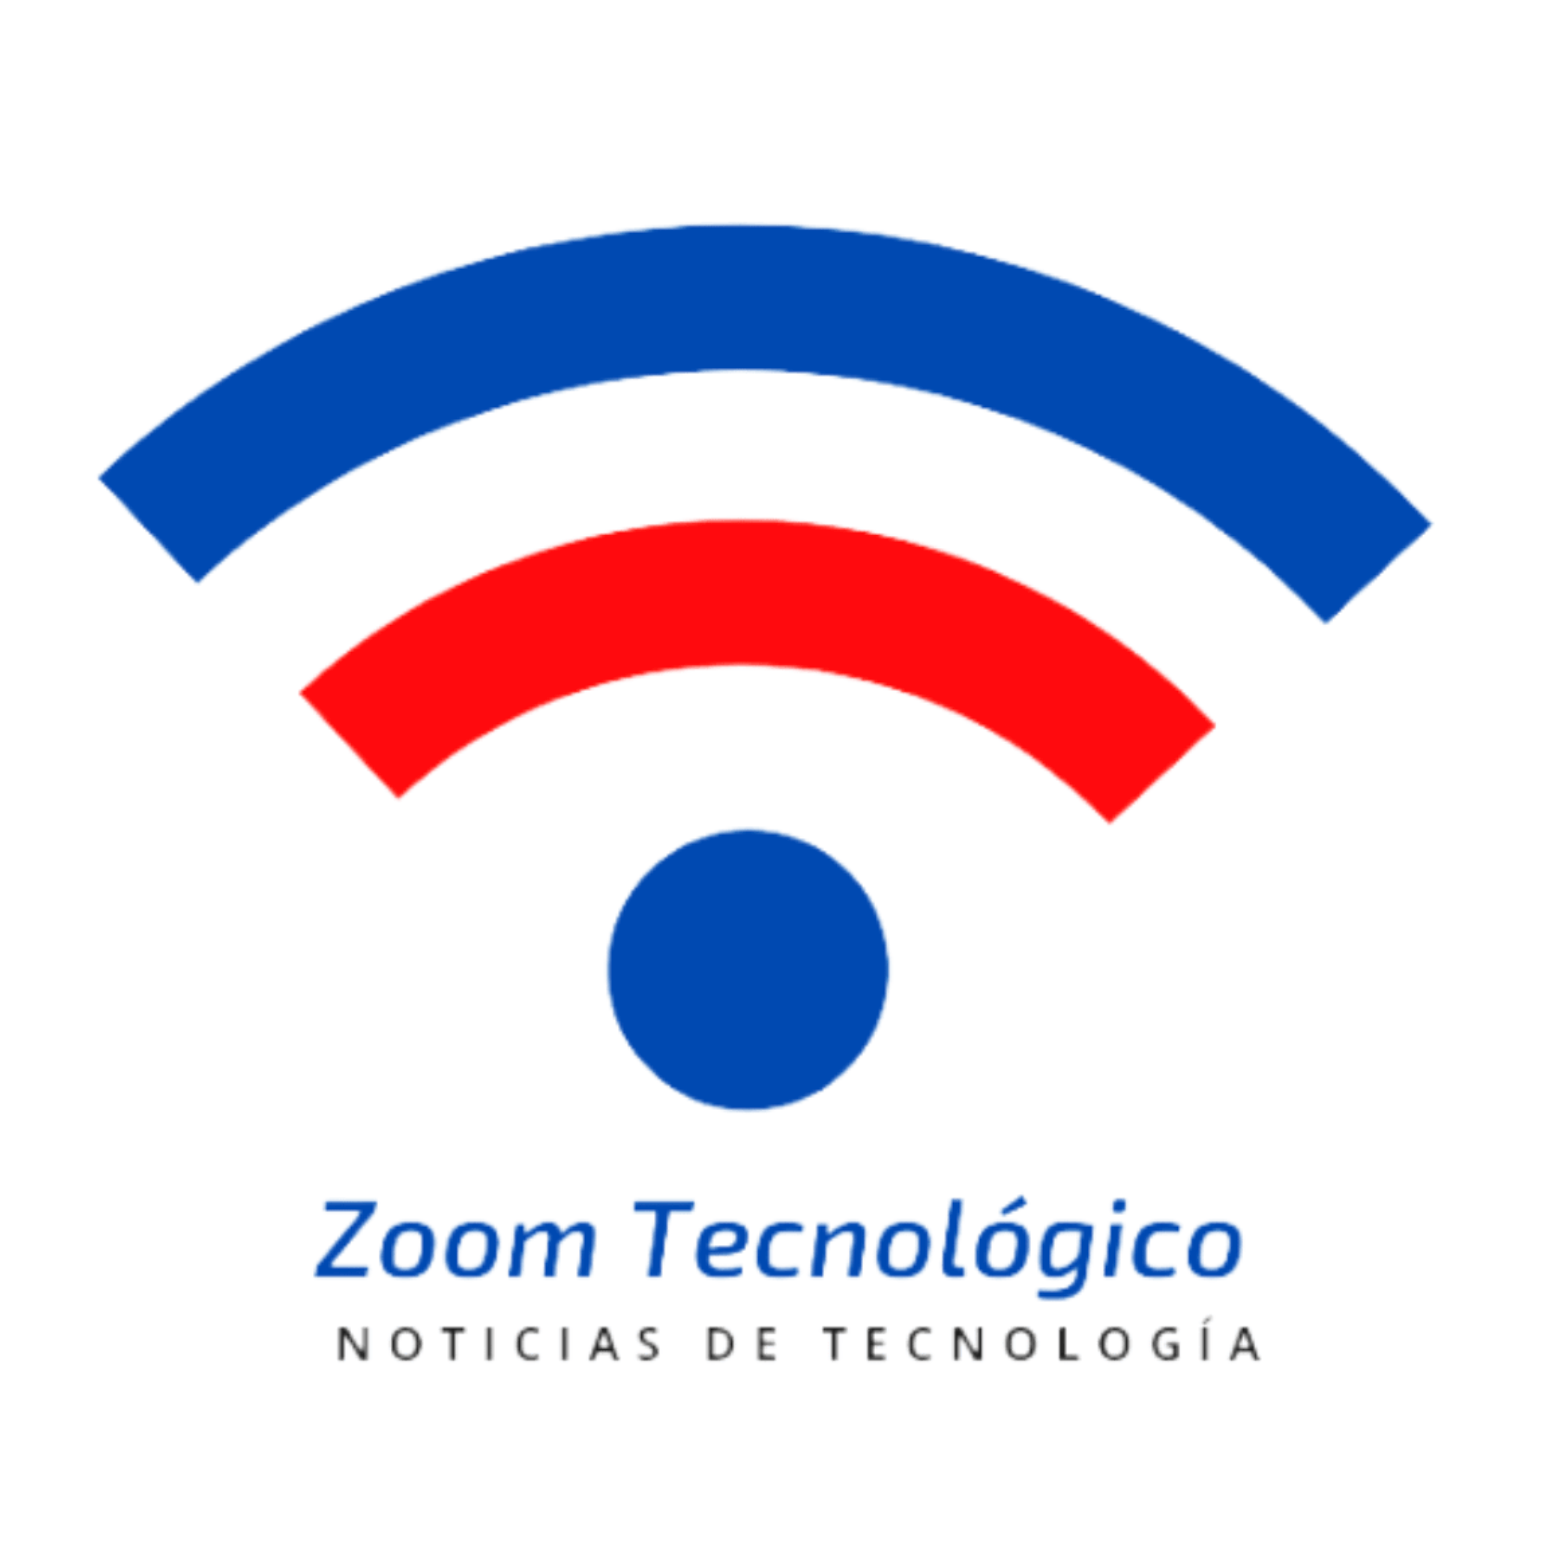 zoom tecnologico logo